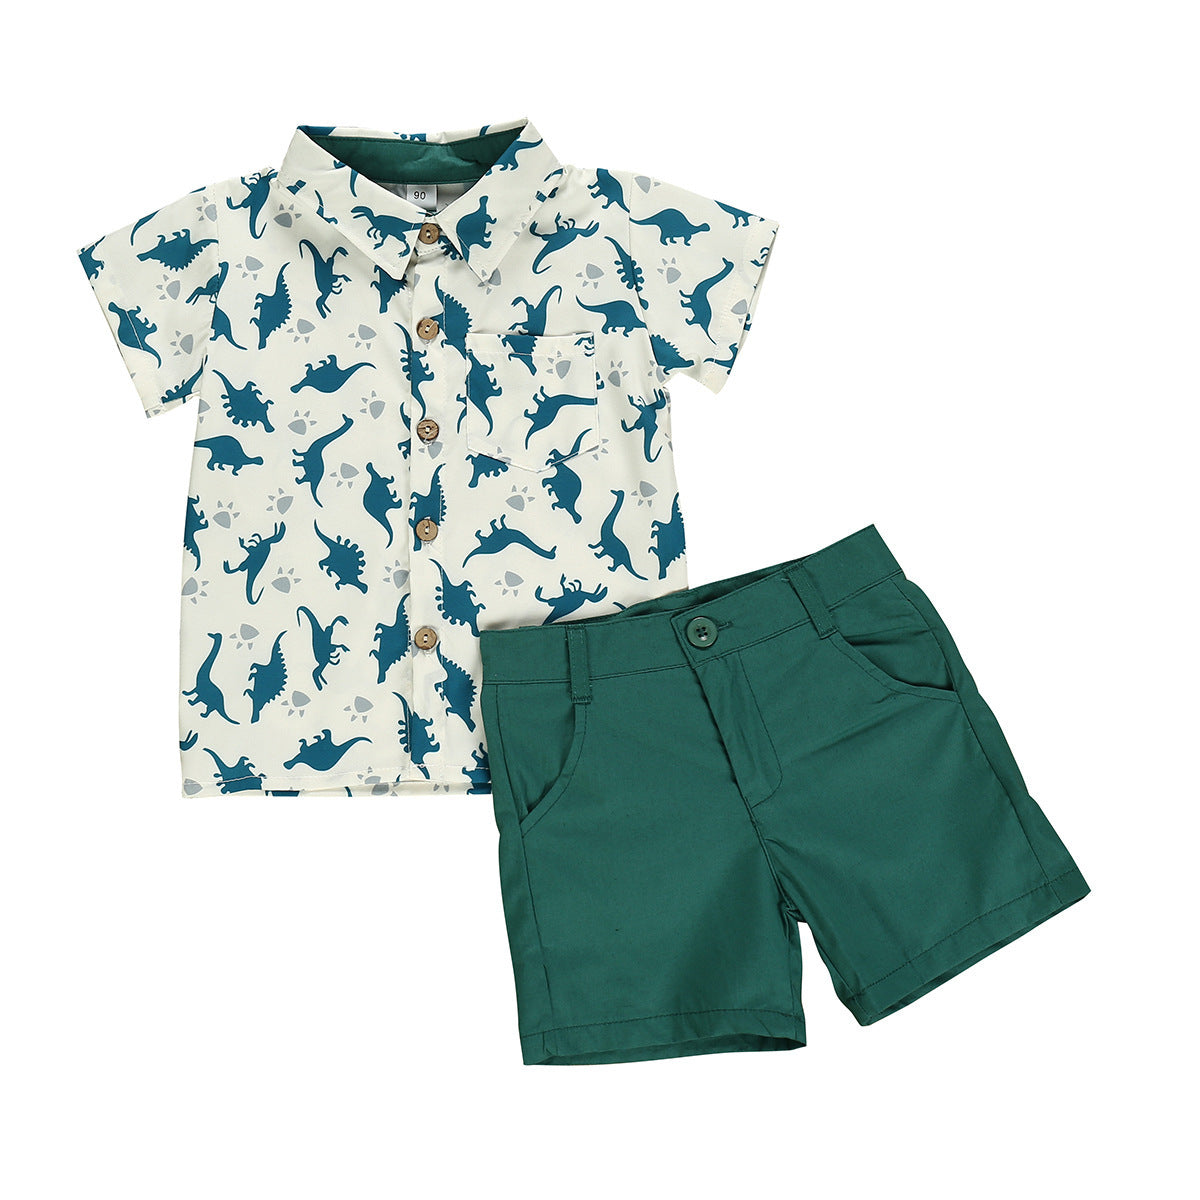 Dinosaur fun! Boys' summer outfit with a dinosaur print shirt and pants